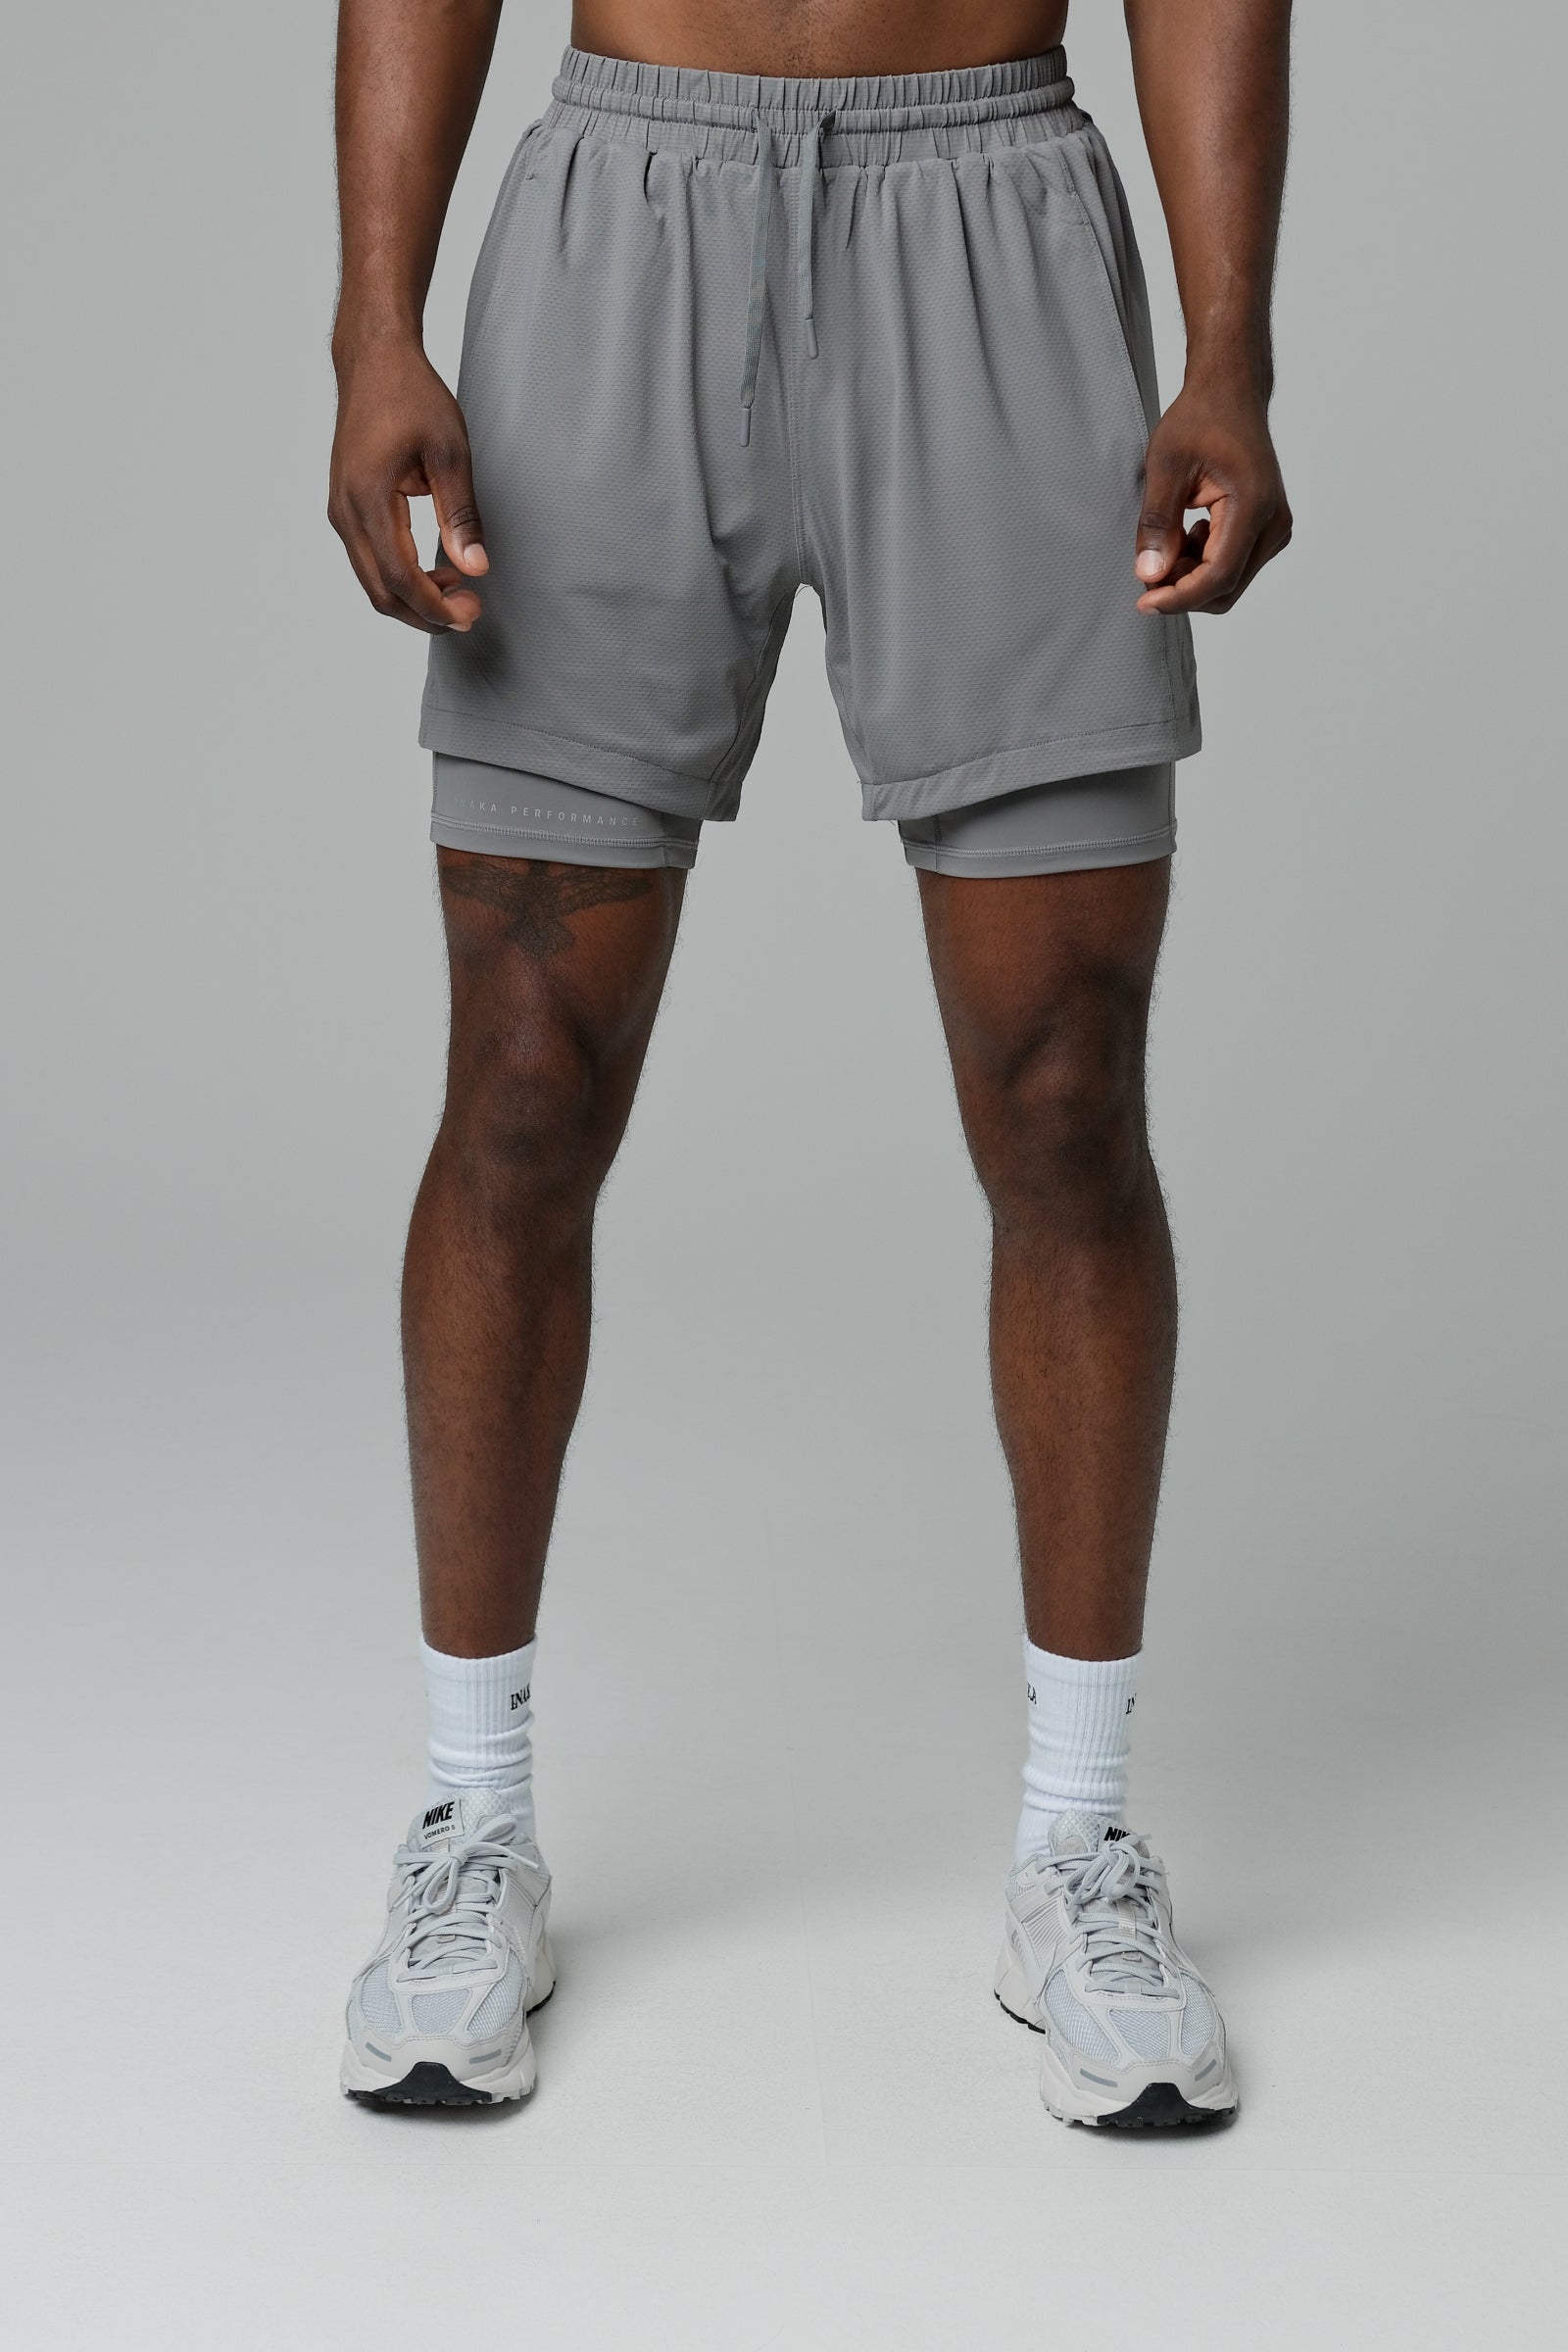 CoreLite Shorts Lined - Steel Grey